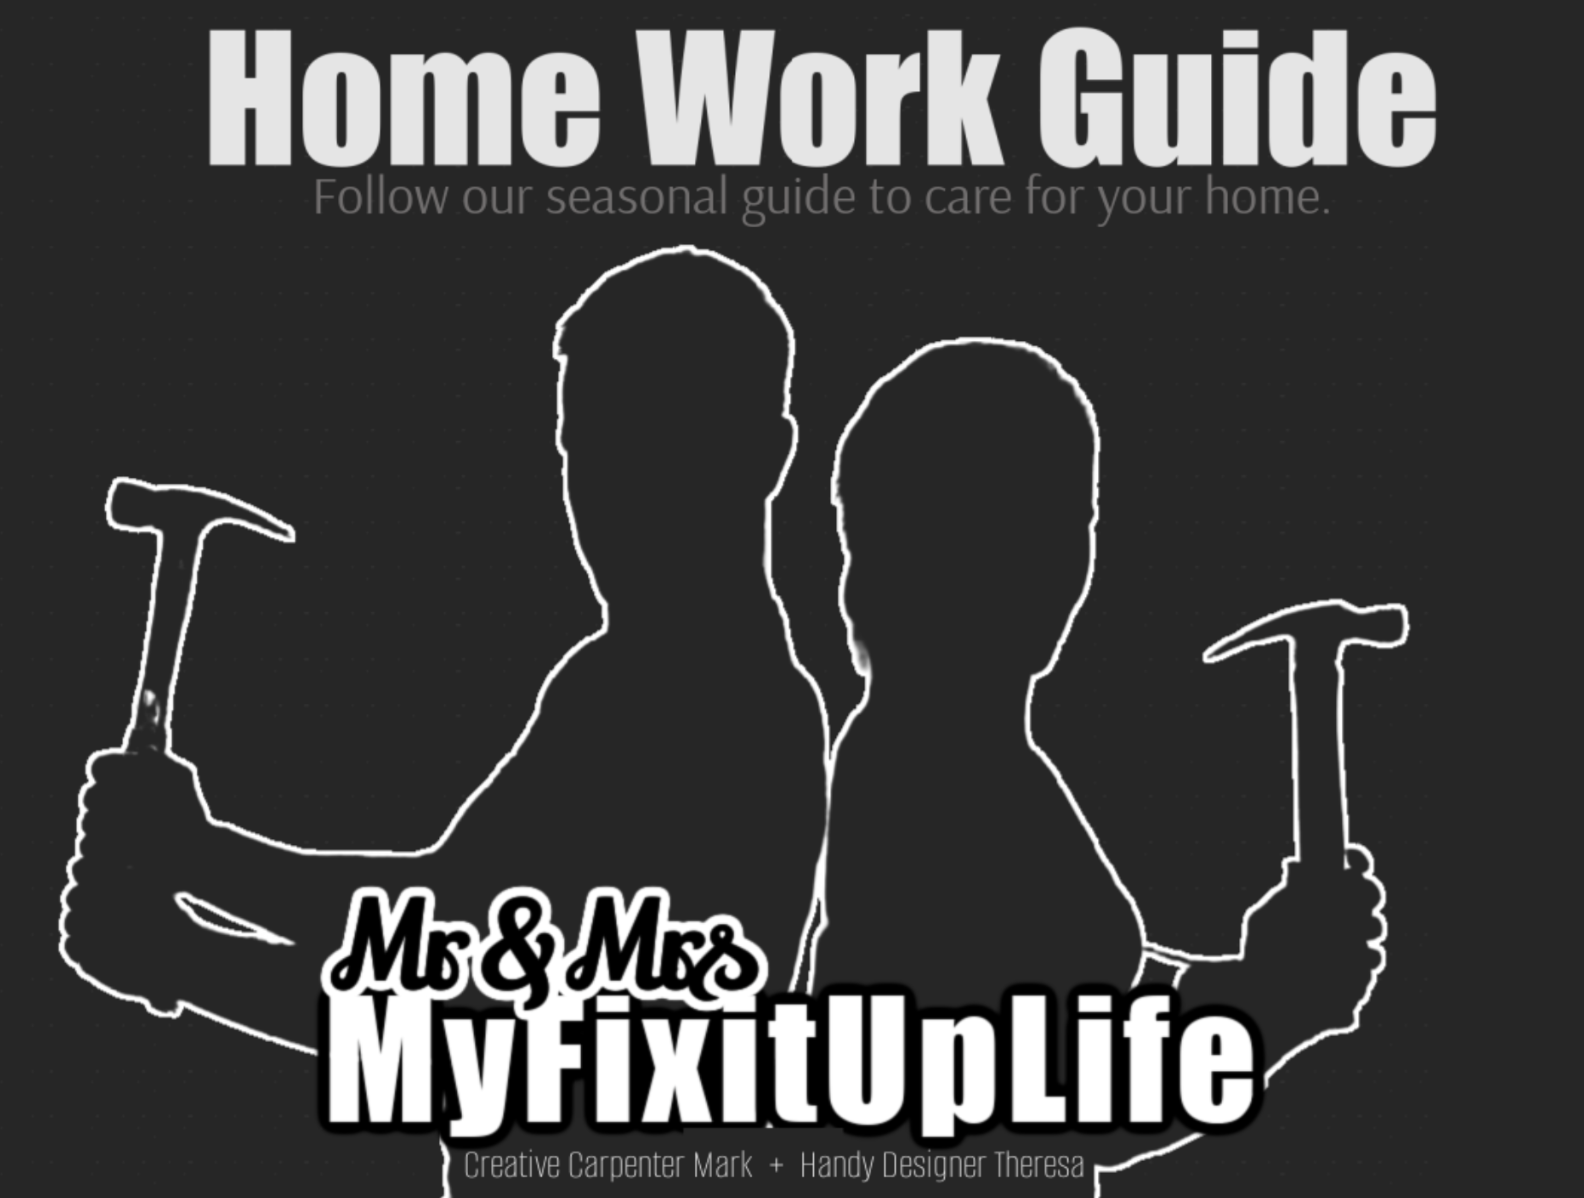 Home Work Guide MyFixitUpLife